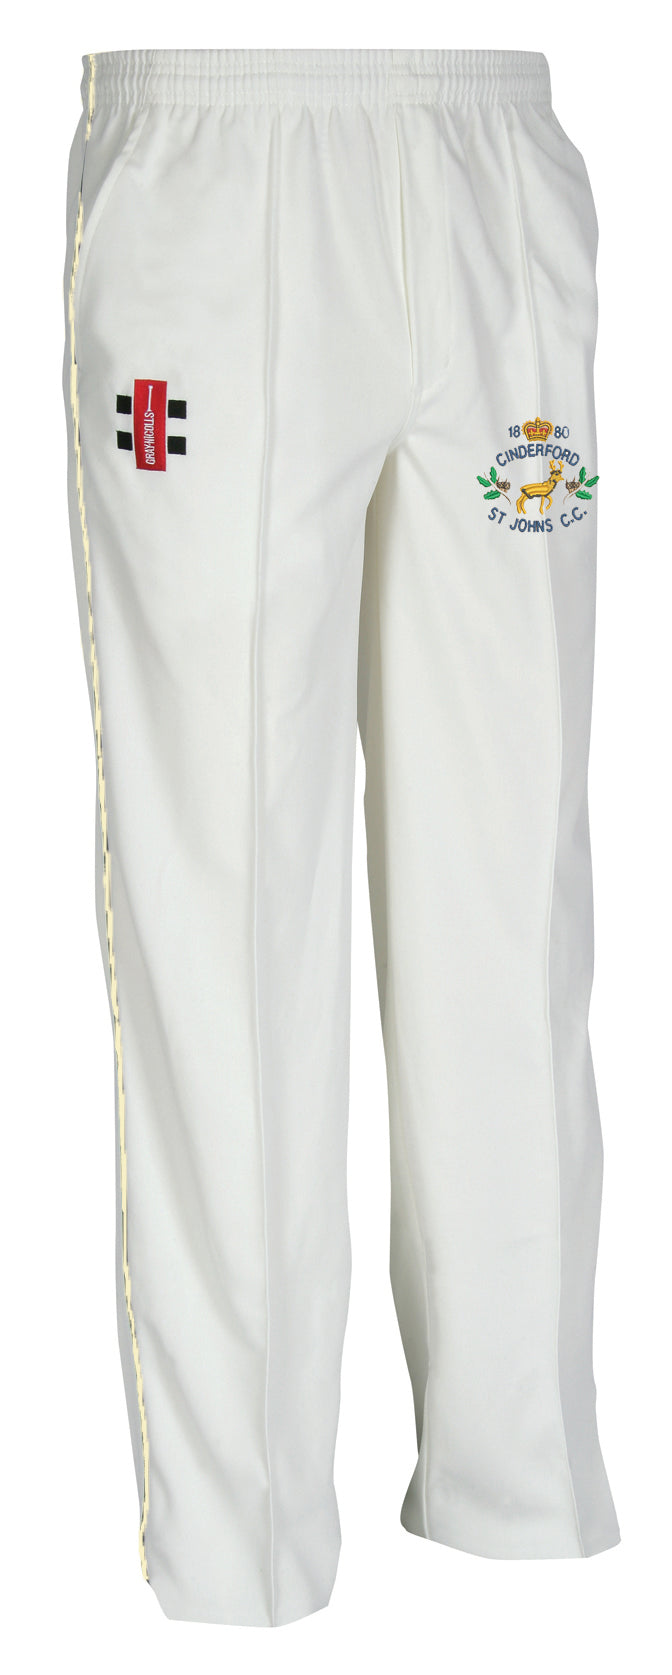 Cinderford St Johns CC Junior Matrix Cricket Trouser